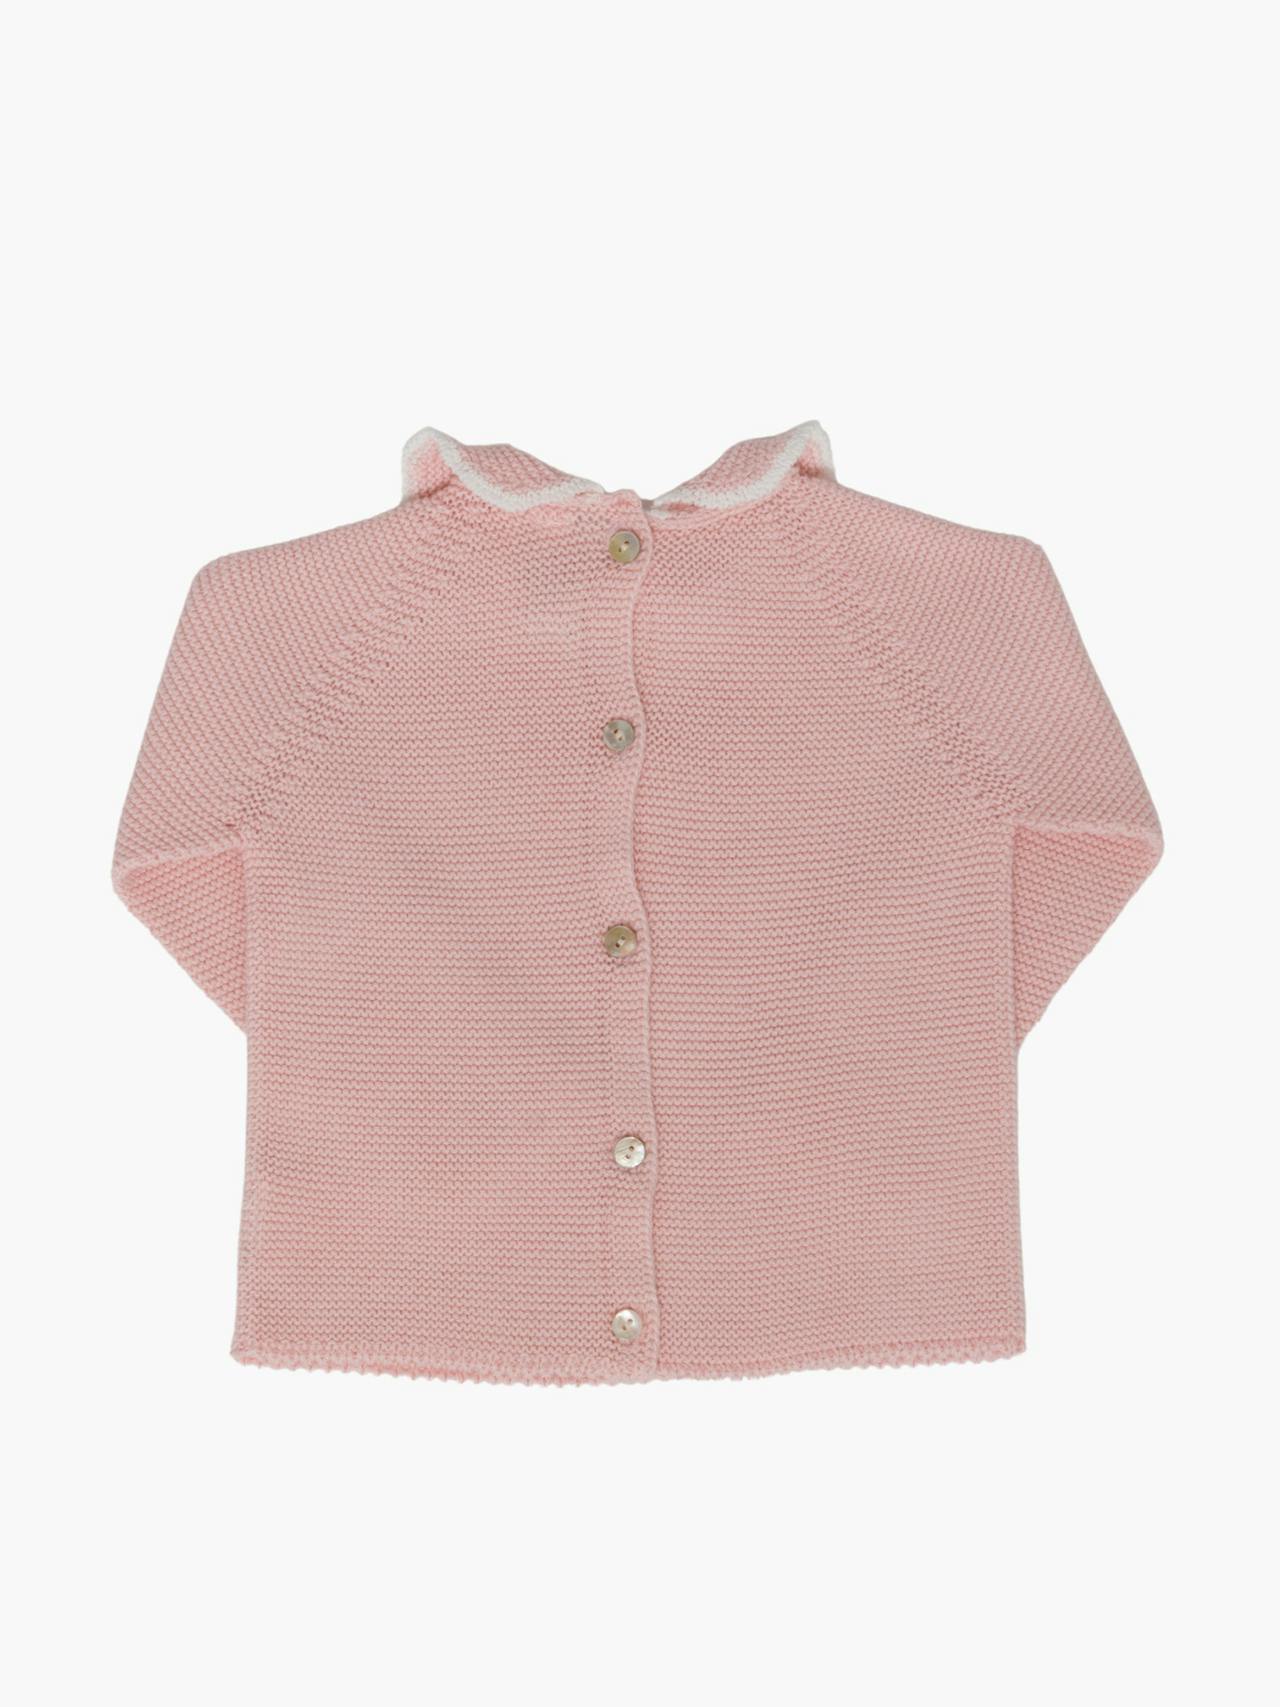 Powder pink collar jumper